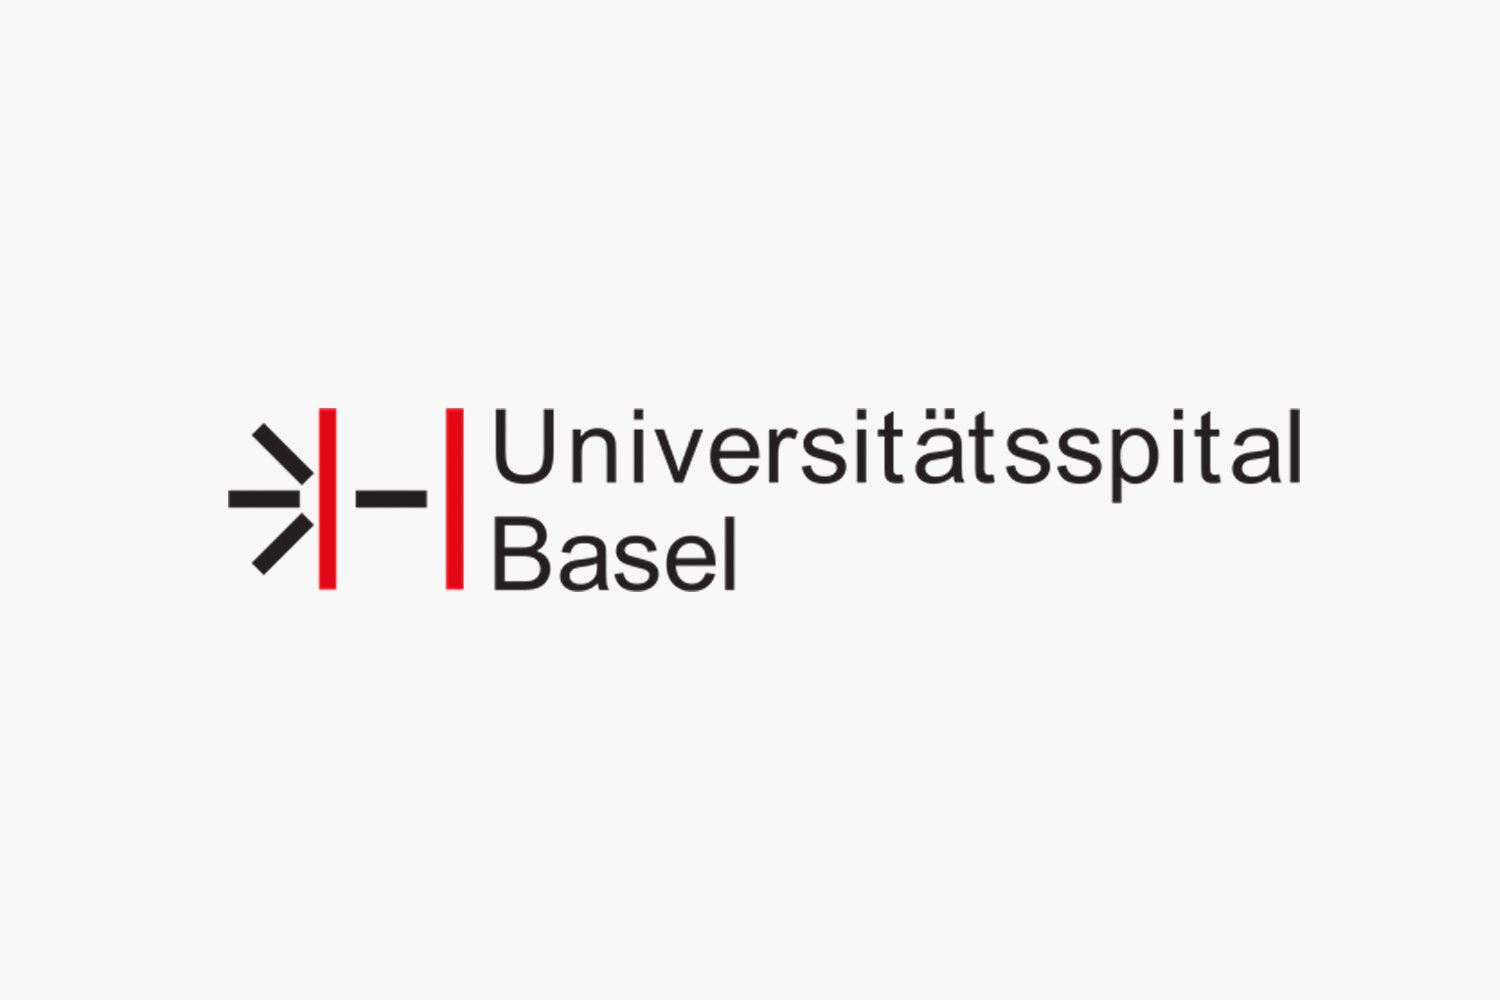 Universitaetsspital Basel.jpg